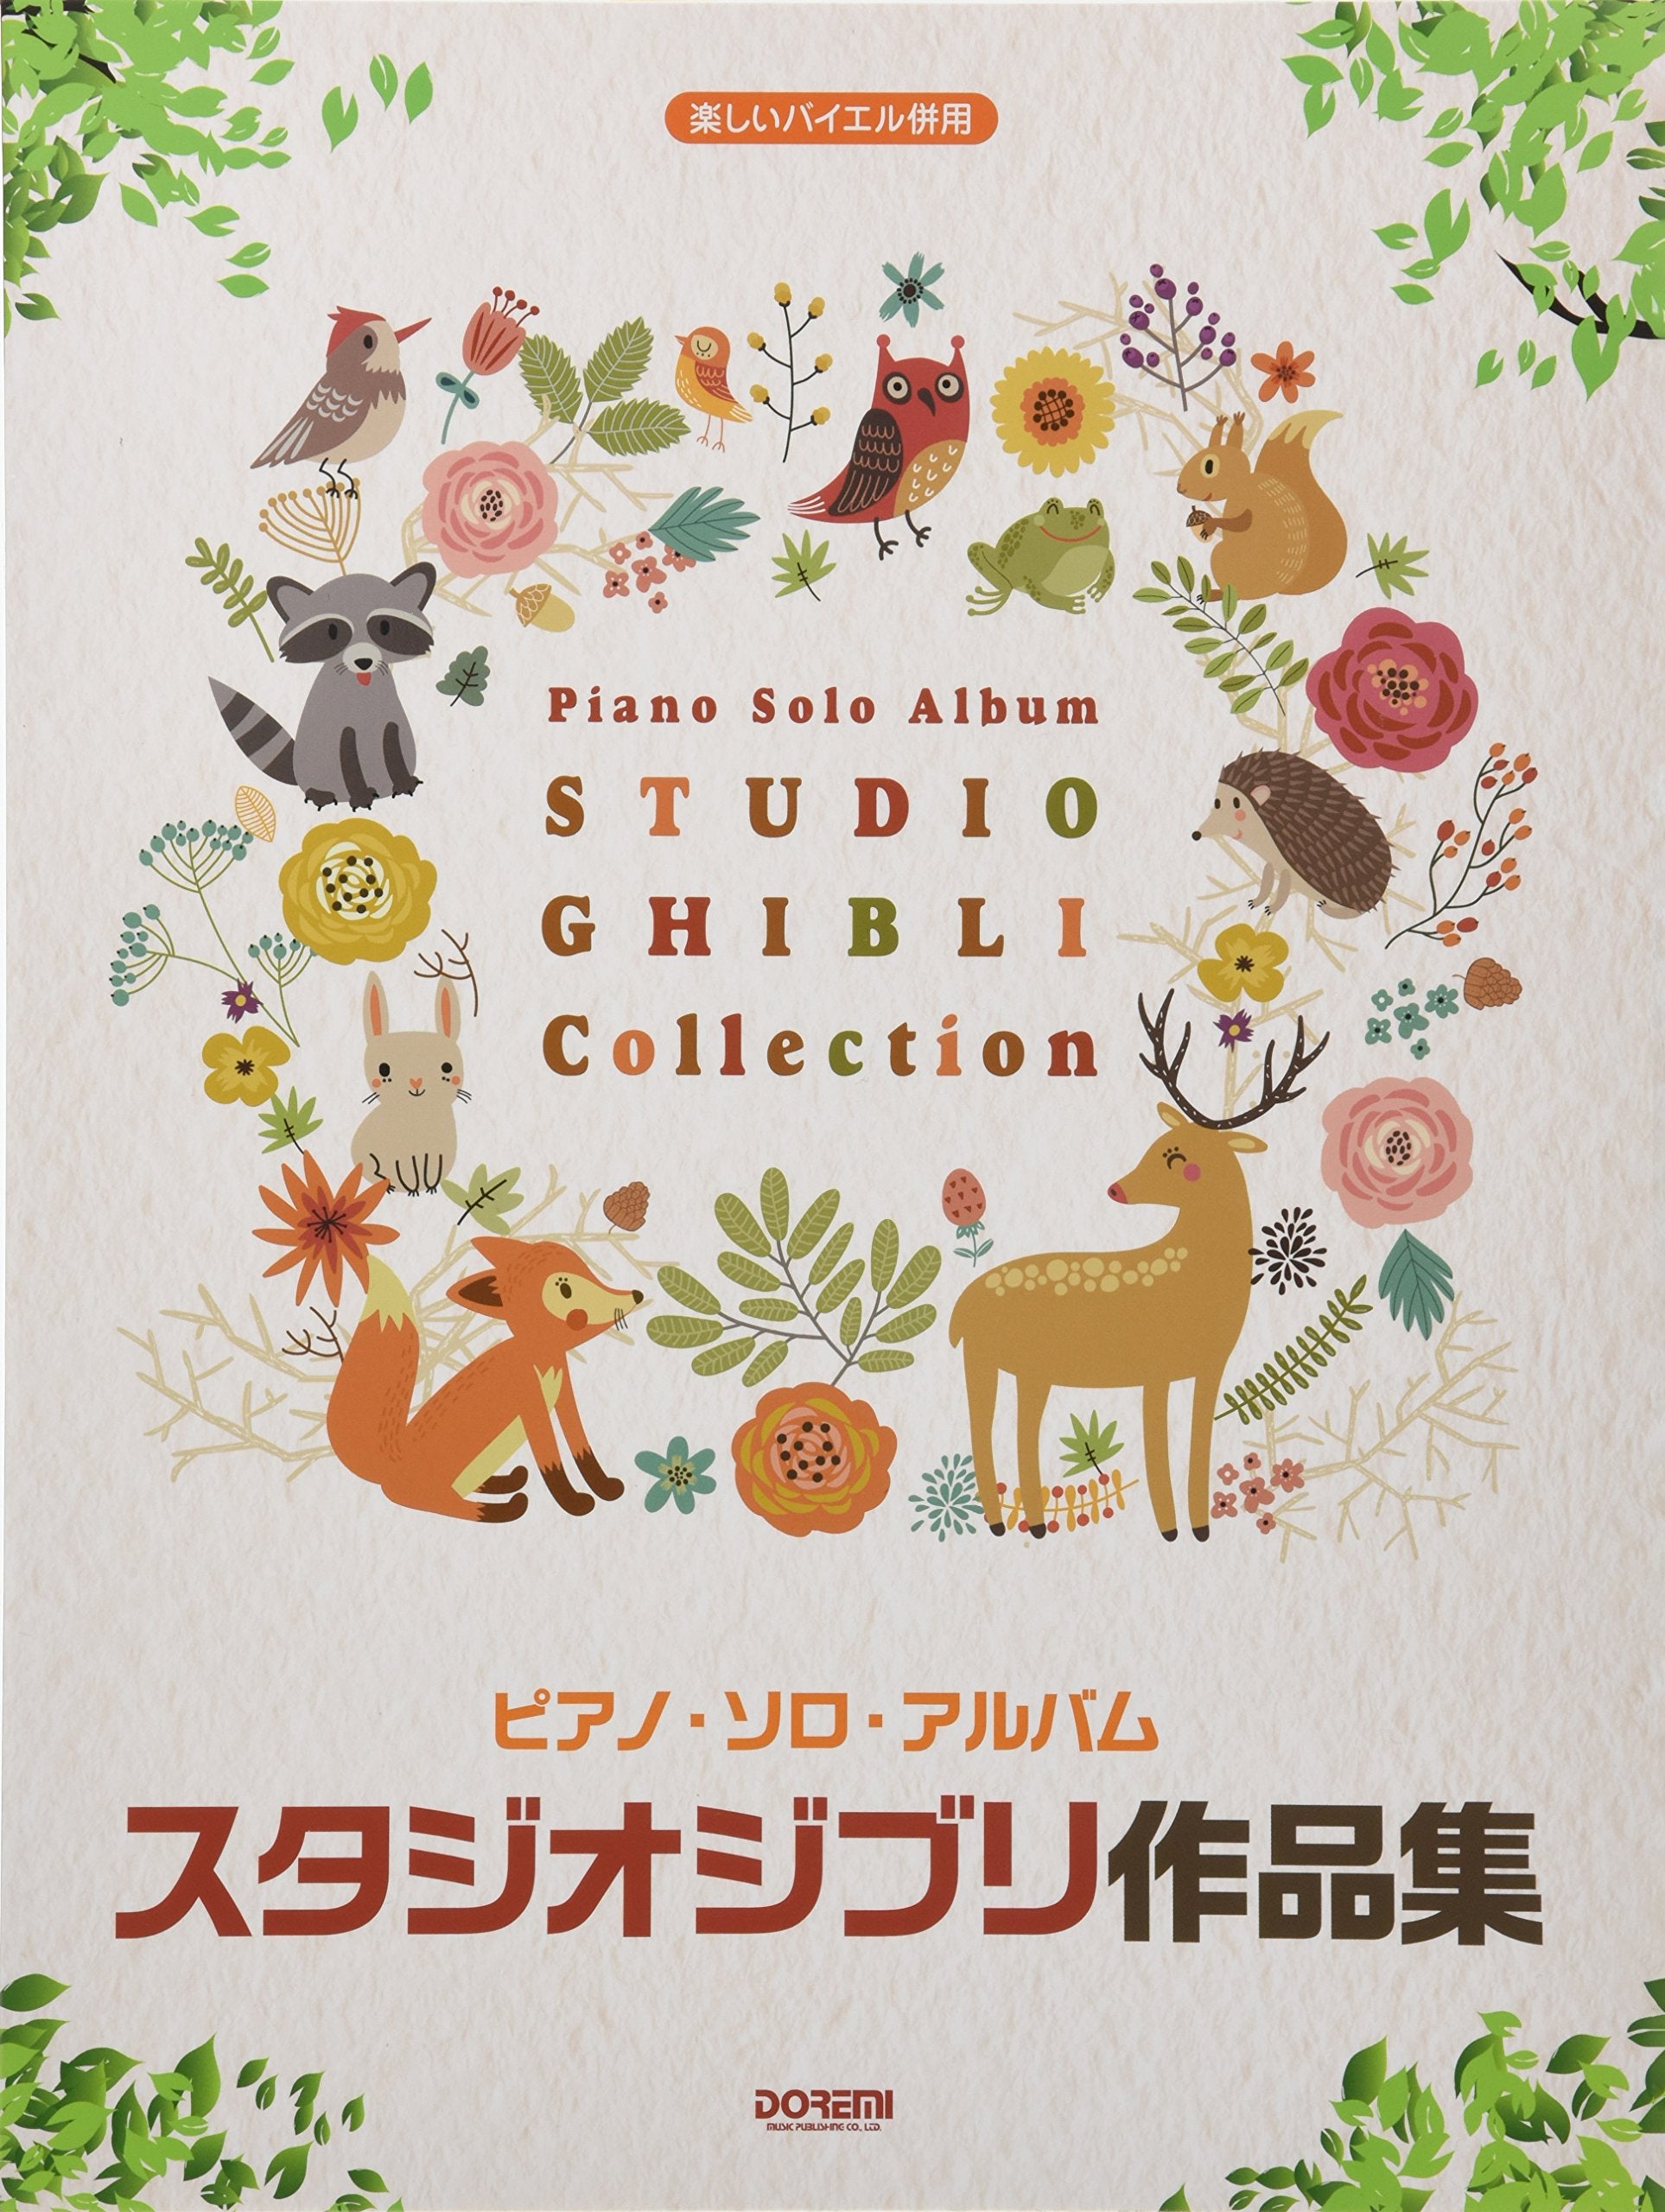 Studio GHIBLI's Songs Collection